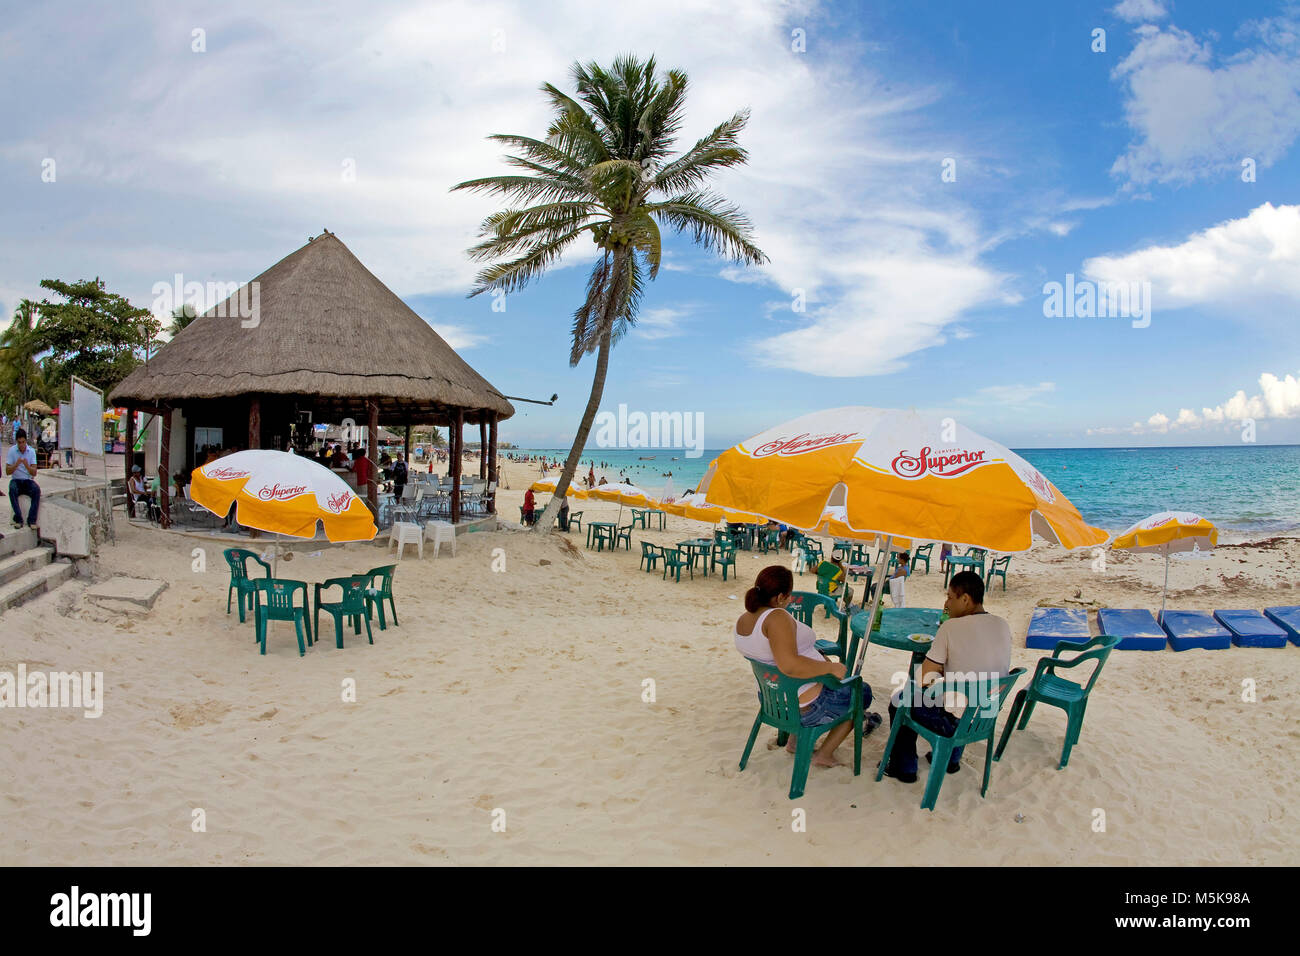 Strandbar am Strand von Playa del Carmen, Playa del Carmen, Mexiko, Karibik | Beach bar at beach of Playa del Carmen, Mexico, Caribbean Stock Photo